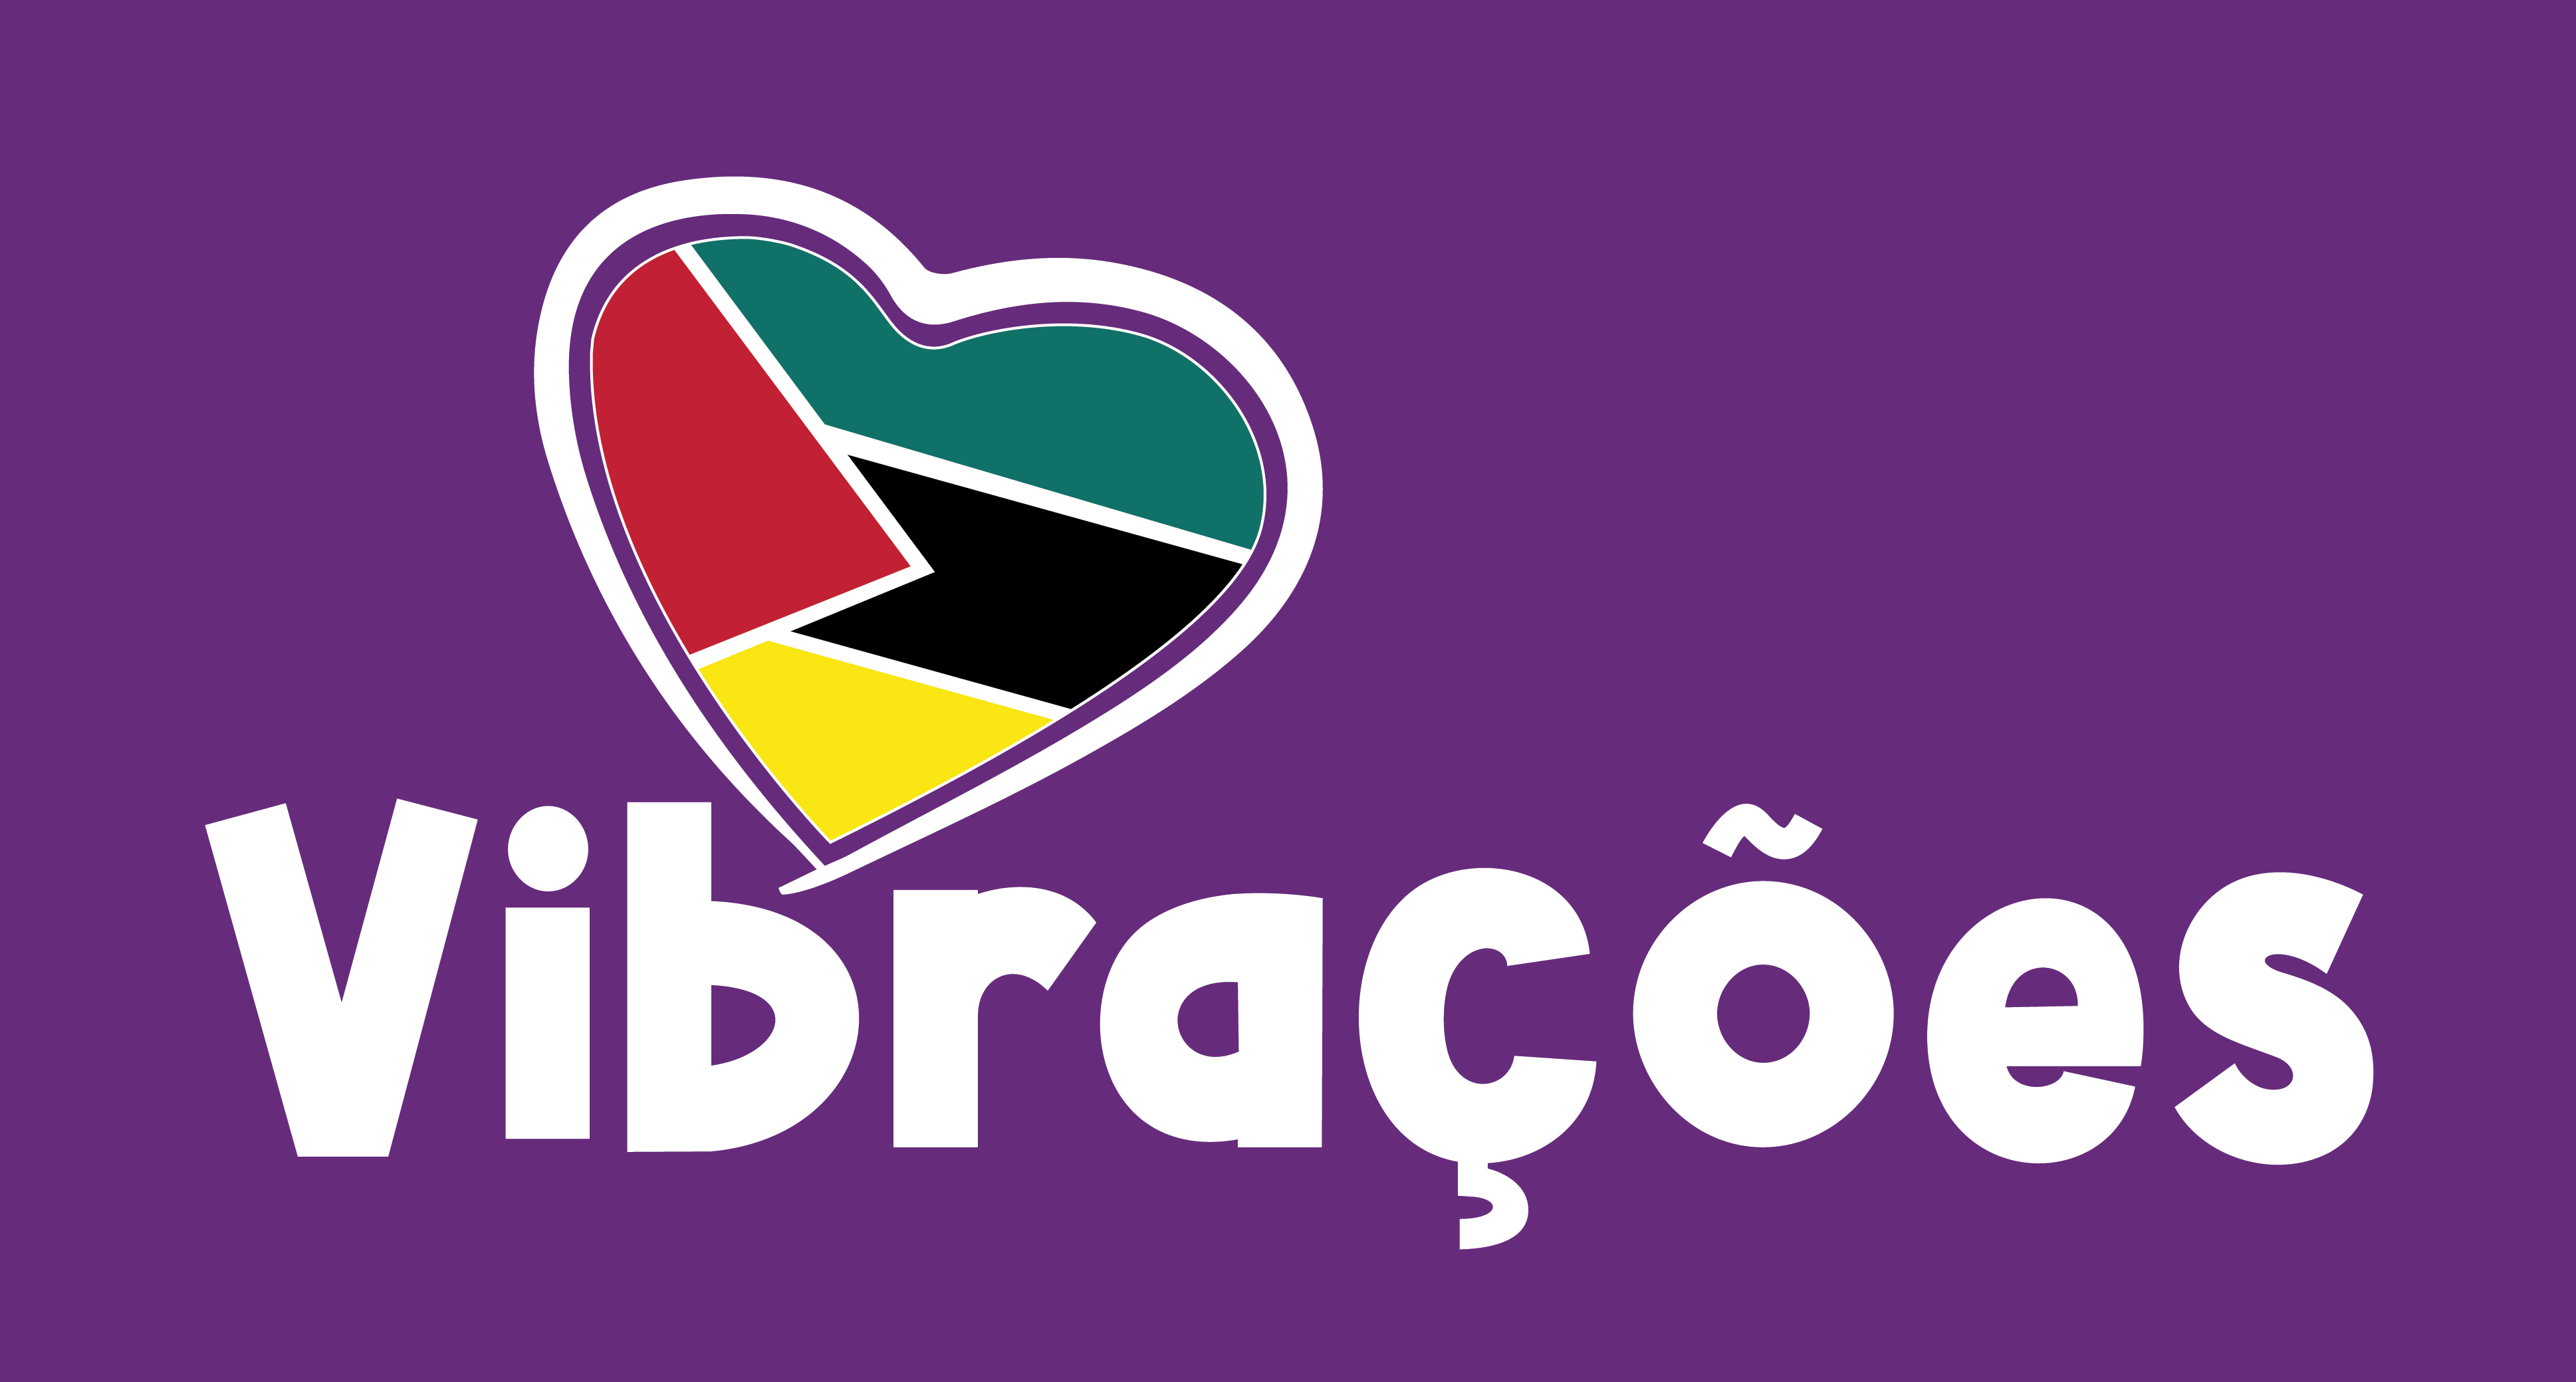 Vibracoes logo